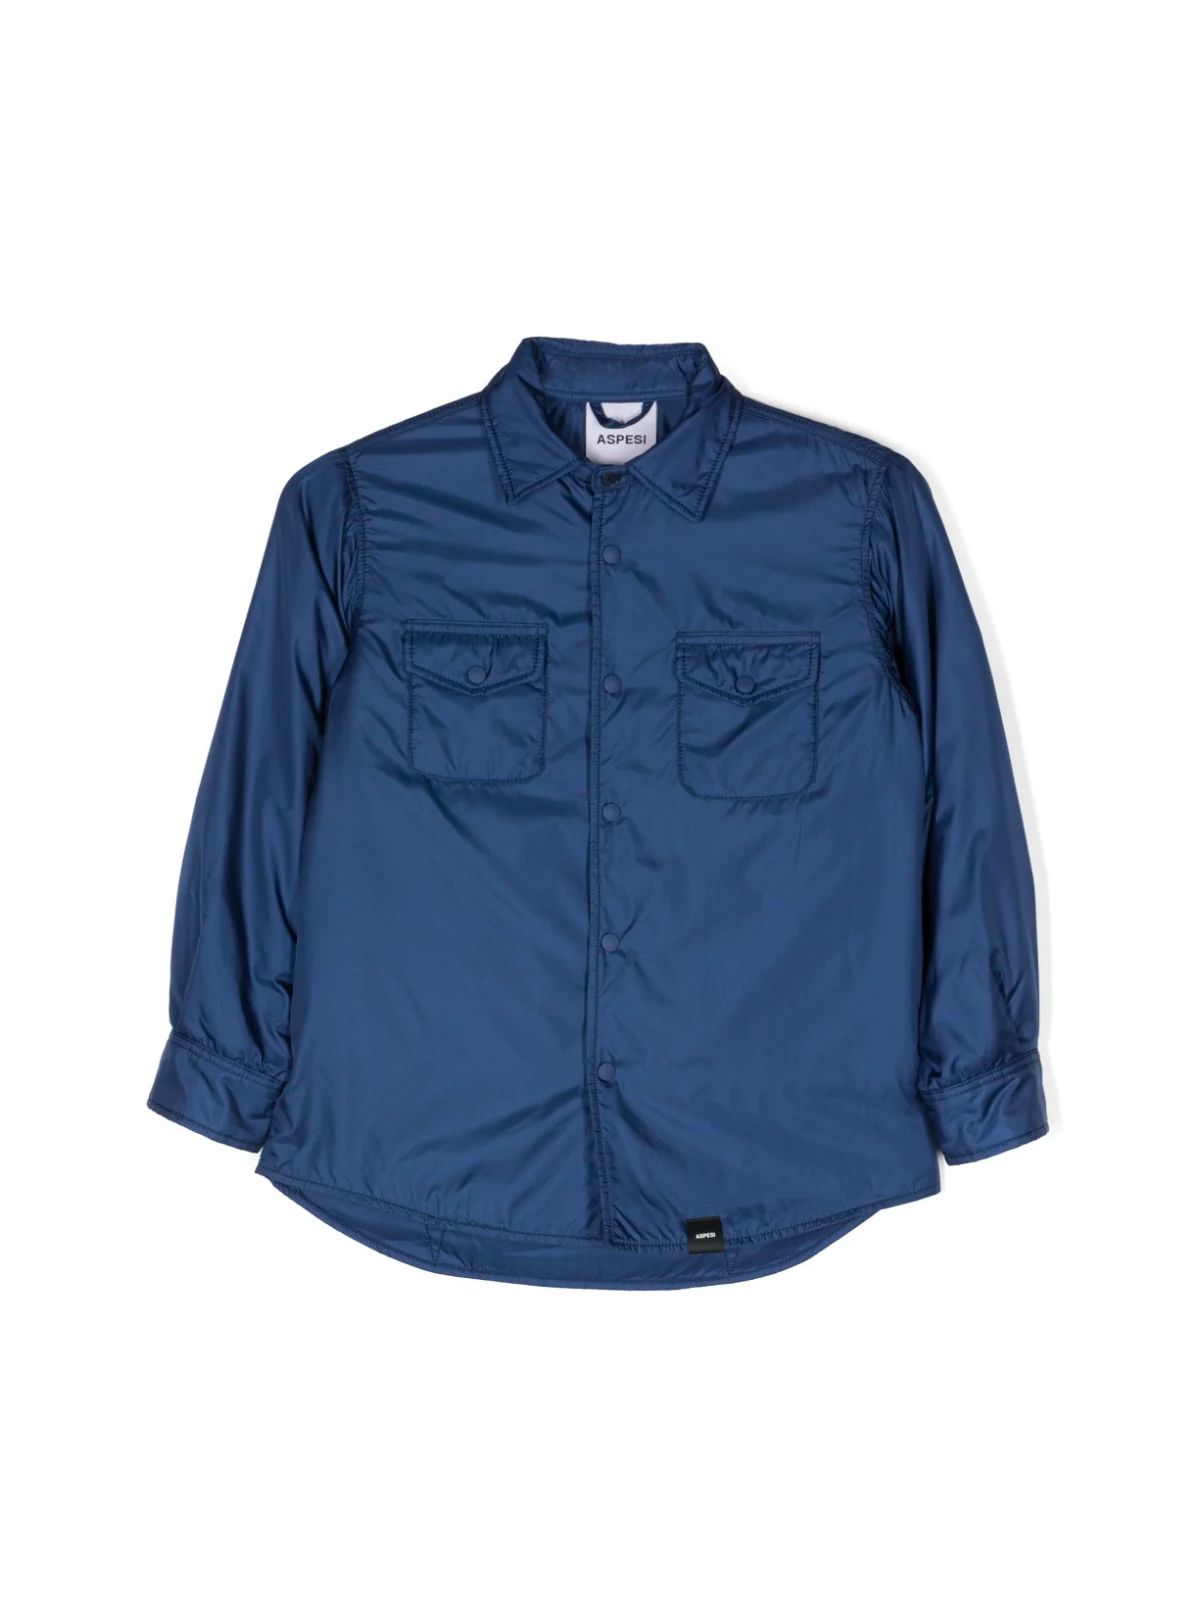 Aspesi Logo-patch Shirt Jacket In Royal Blue